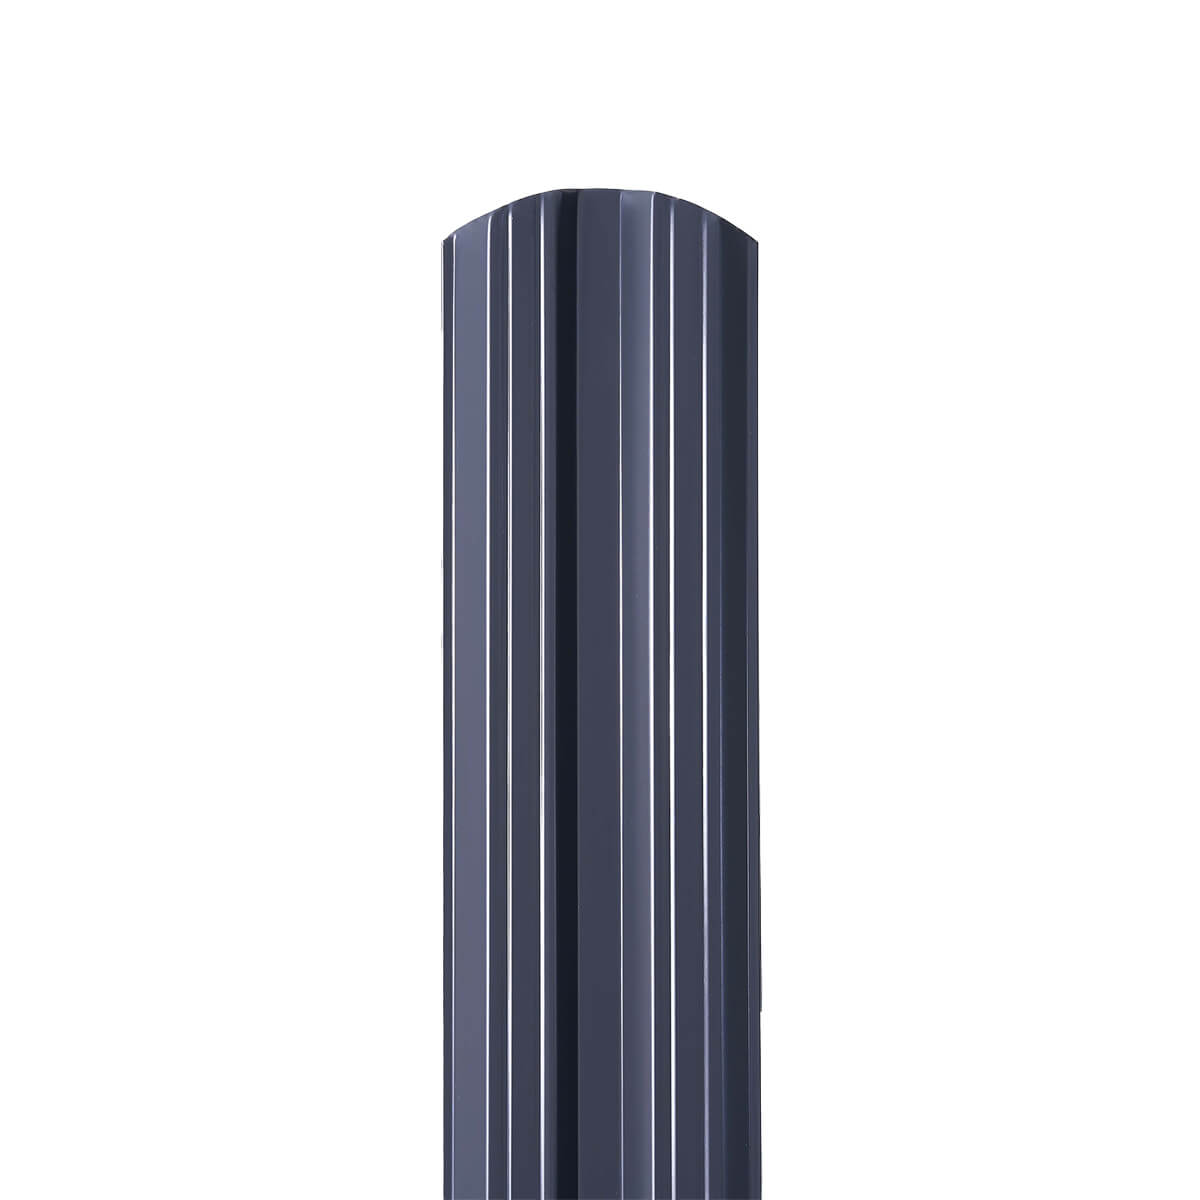 Șipcă metalică – RAL 7024 lucios modern, 0.45 mm